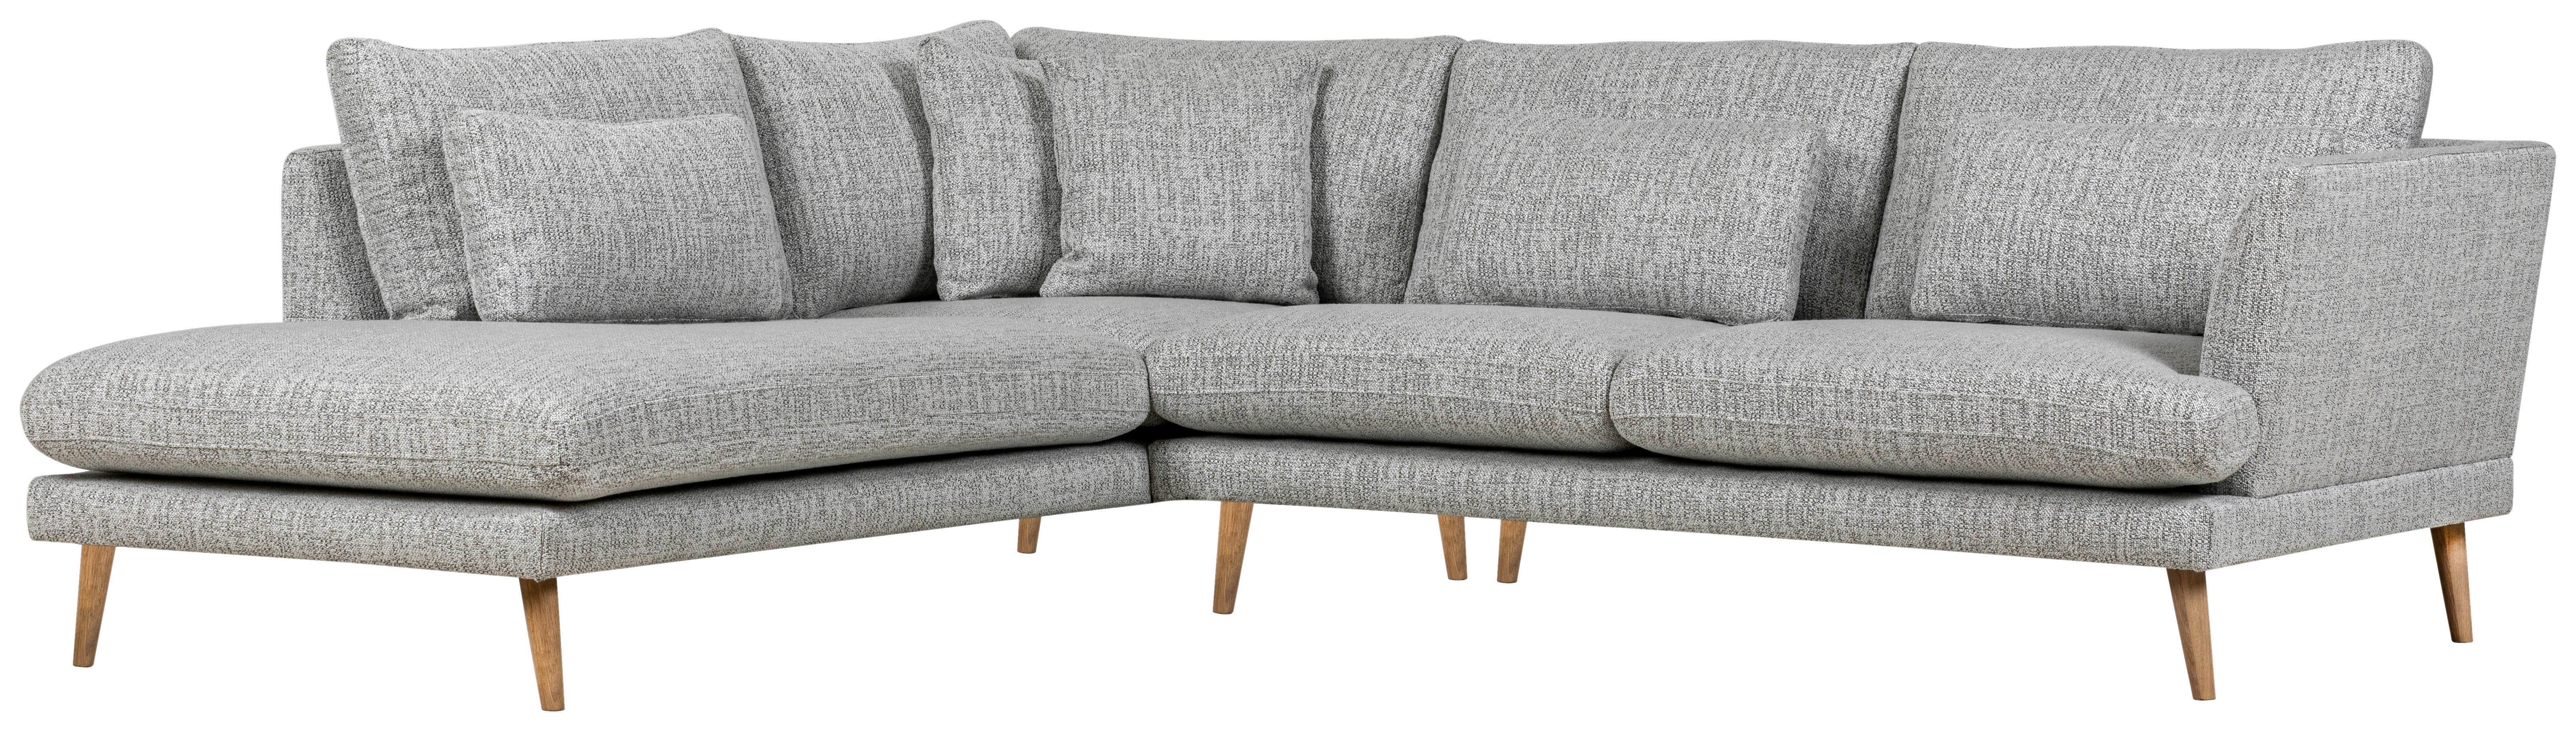 SOFFA i trä, textil ljusgrå  - brun/ljusgrå, Design, trä/textil (273/82/229cm) - Pure Home Comfort